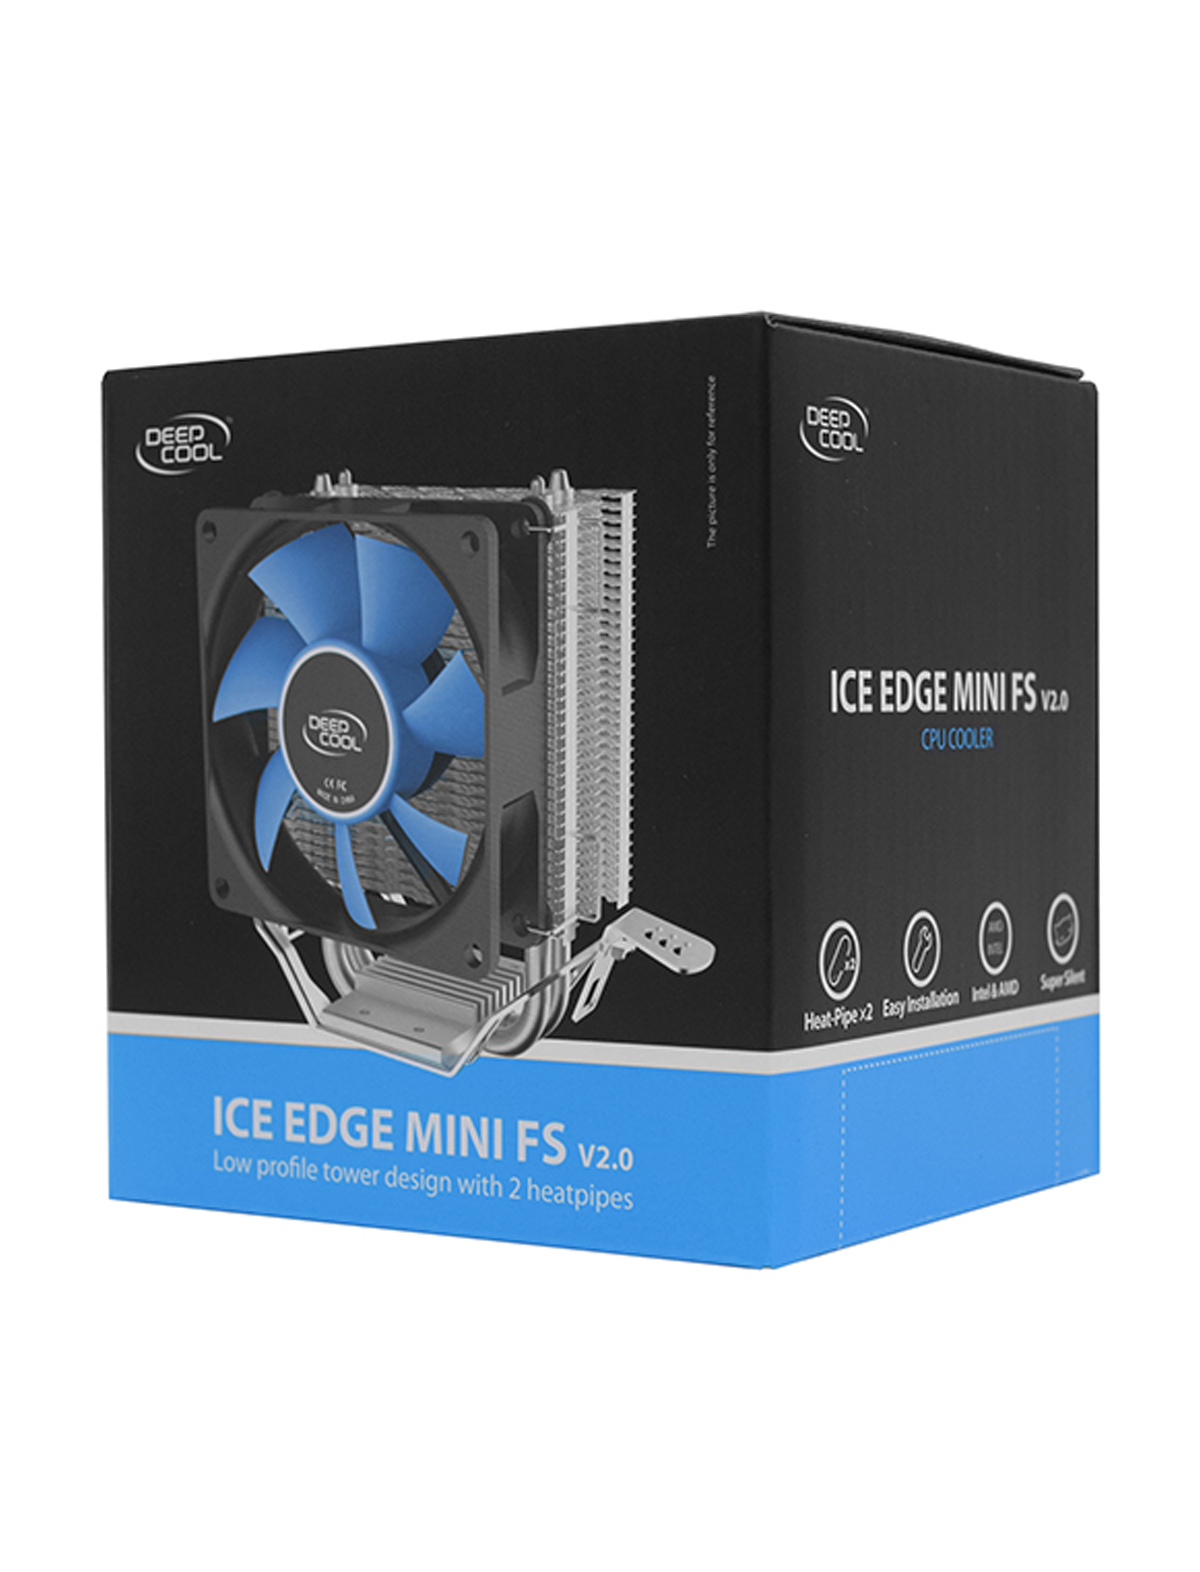 Deepcool ice edge mini v 2.0. Кулер Ice Edge Mini fs2. Deepcool Ice Edge Mini FS 2.0. Deepcool Ice Edge Mini FS V2.0. Ice Edge Mini FS V2.0 коробка.